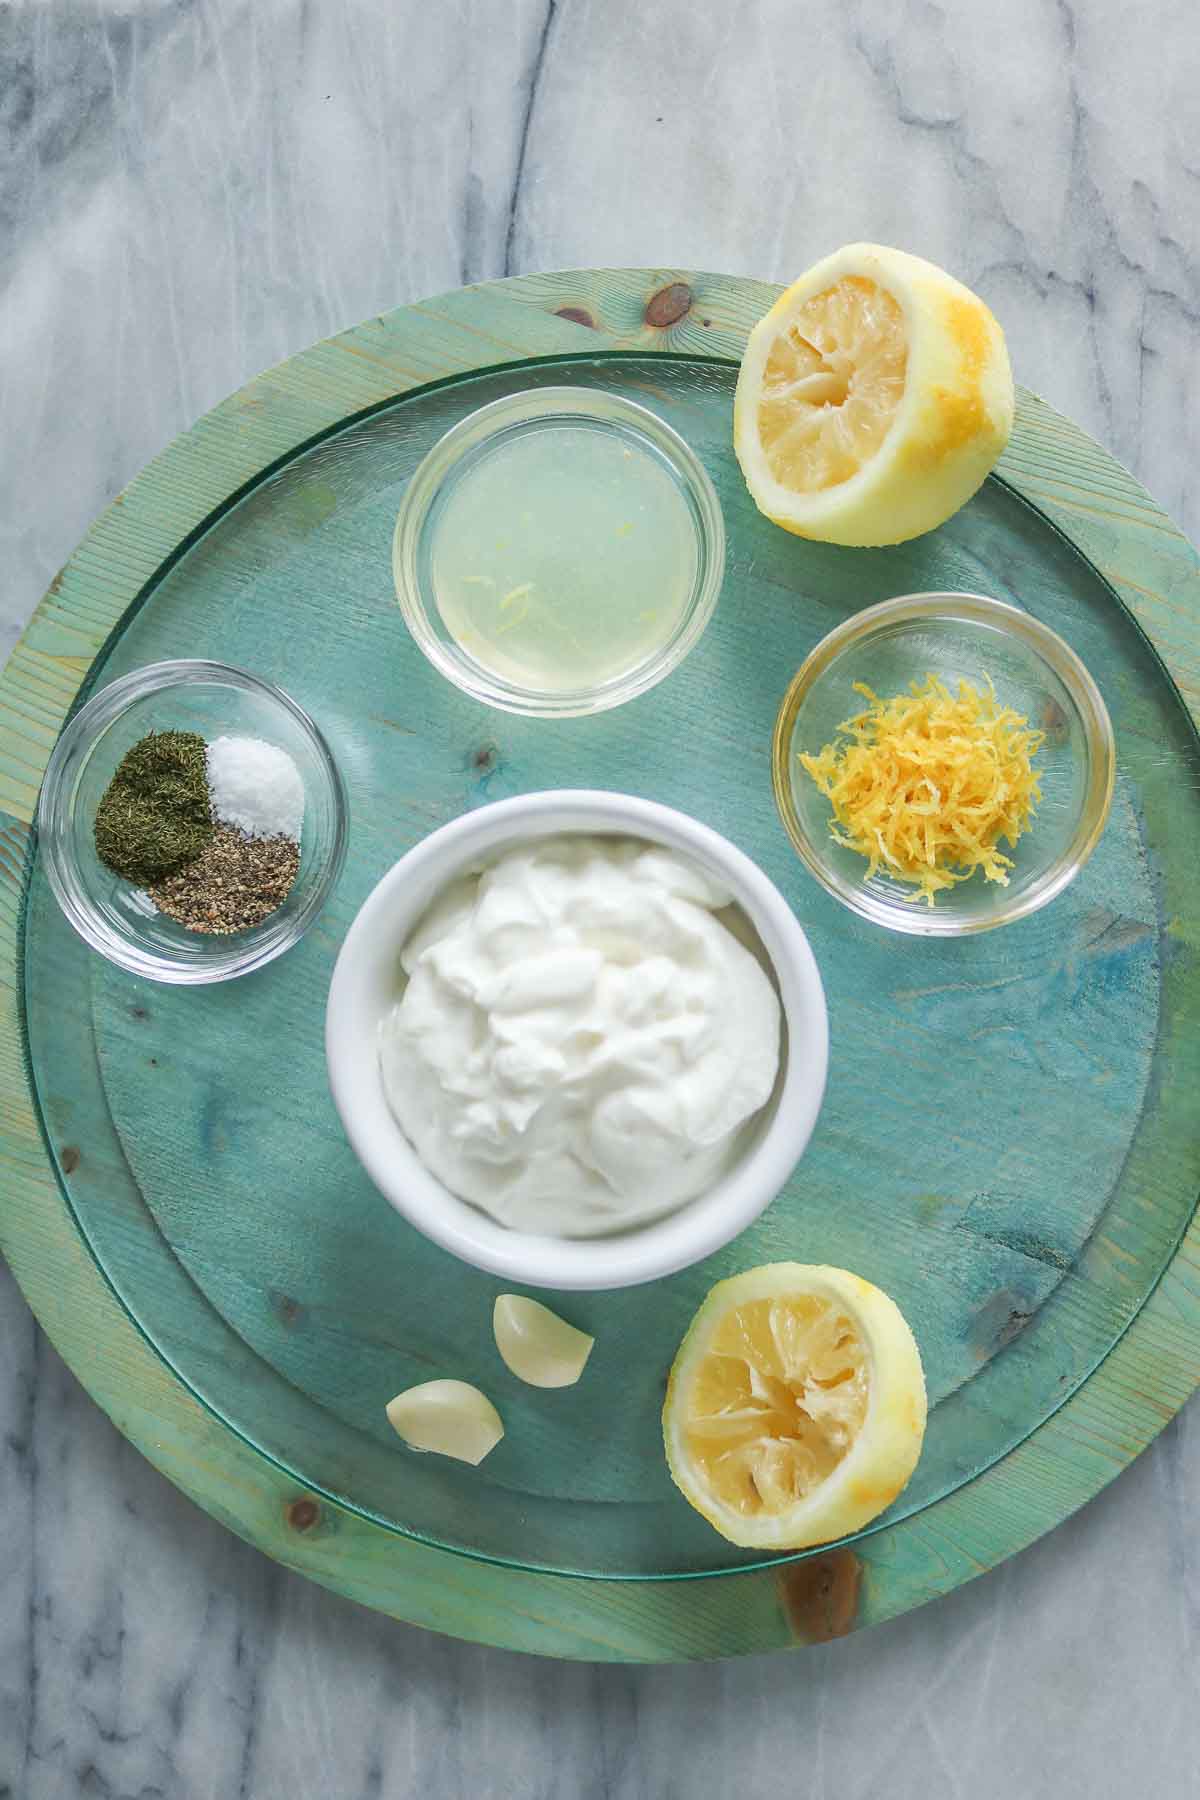 Ingredients for lemon dill yogurt sauce.